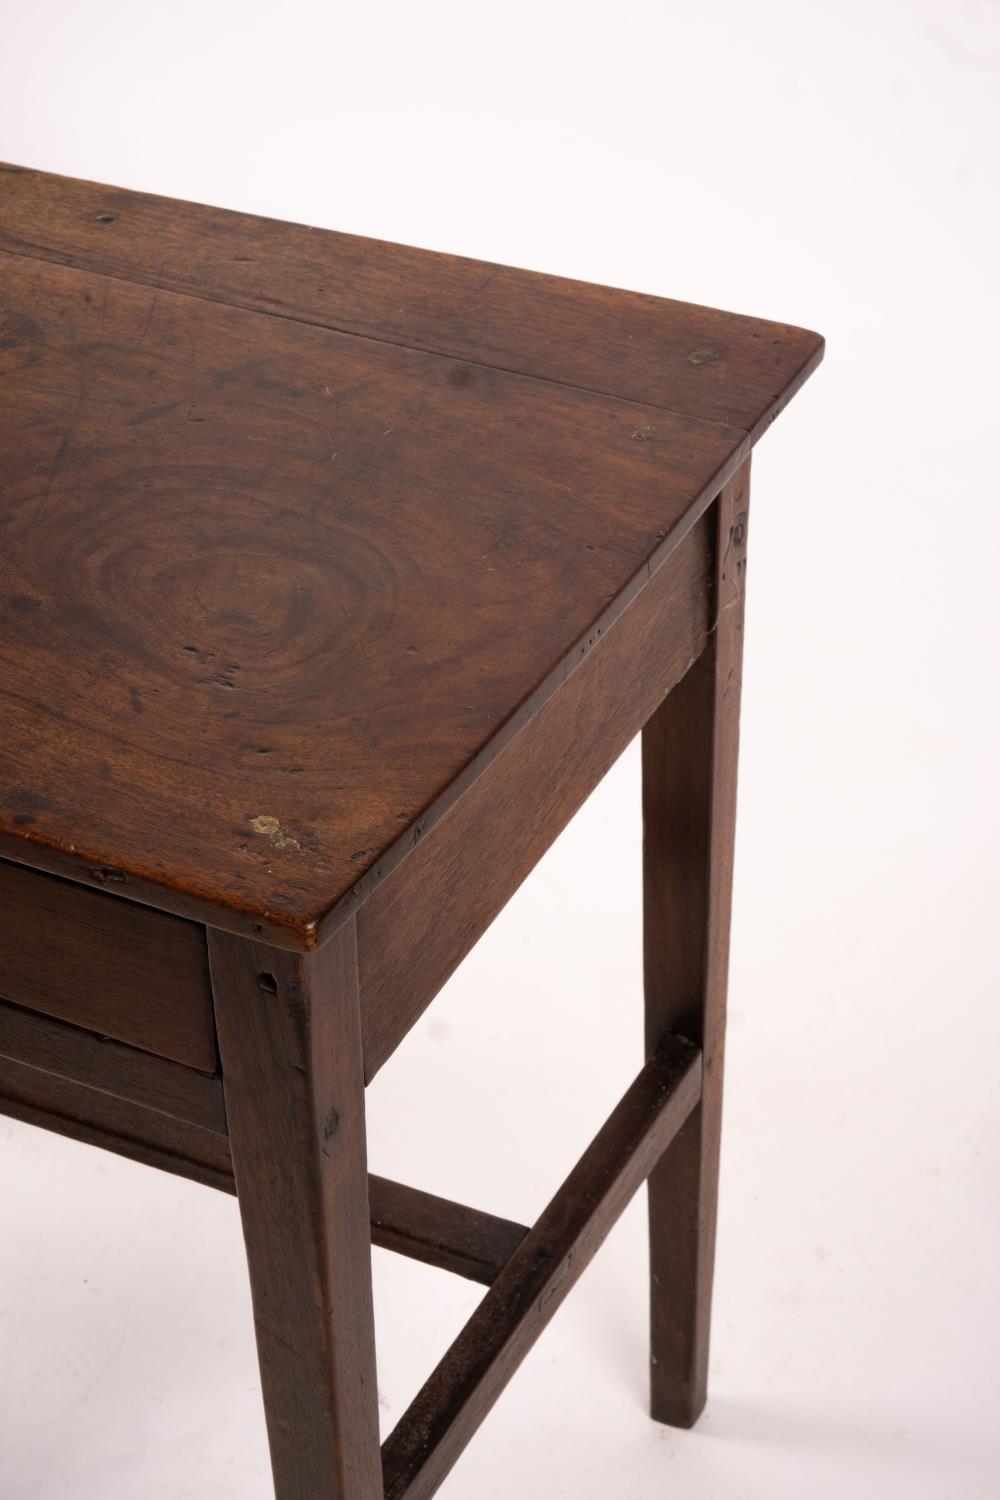 A George III rectangular mahogany side table, width 71cm, depth 45cm, height 67cm - Image 10 of 10